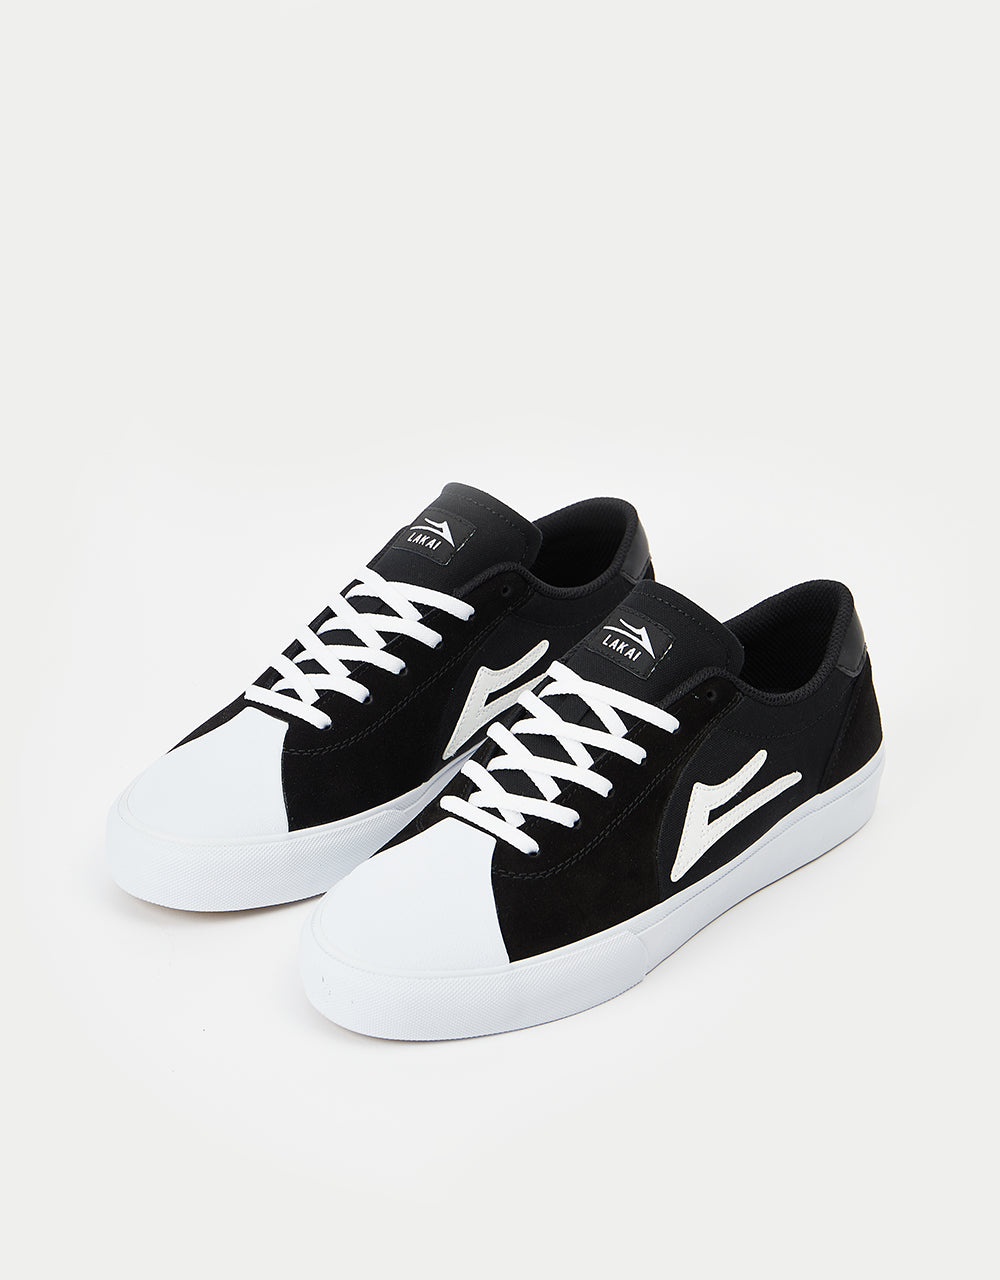 Lakai Flaco II Skate Shoes - Black/White Suede